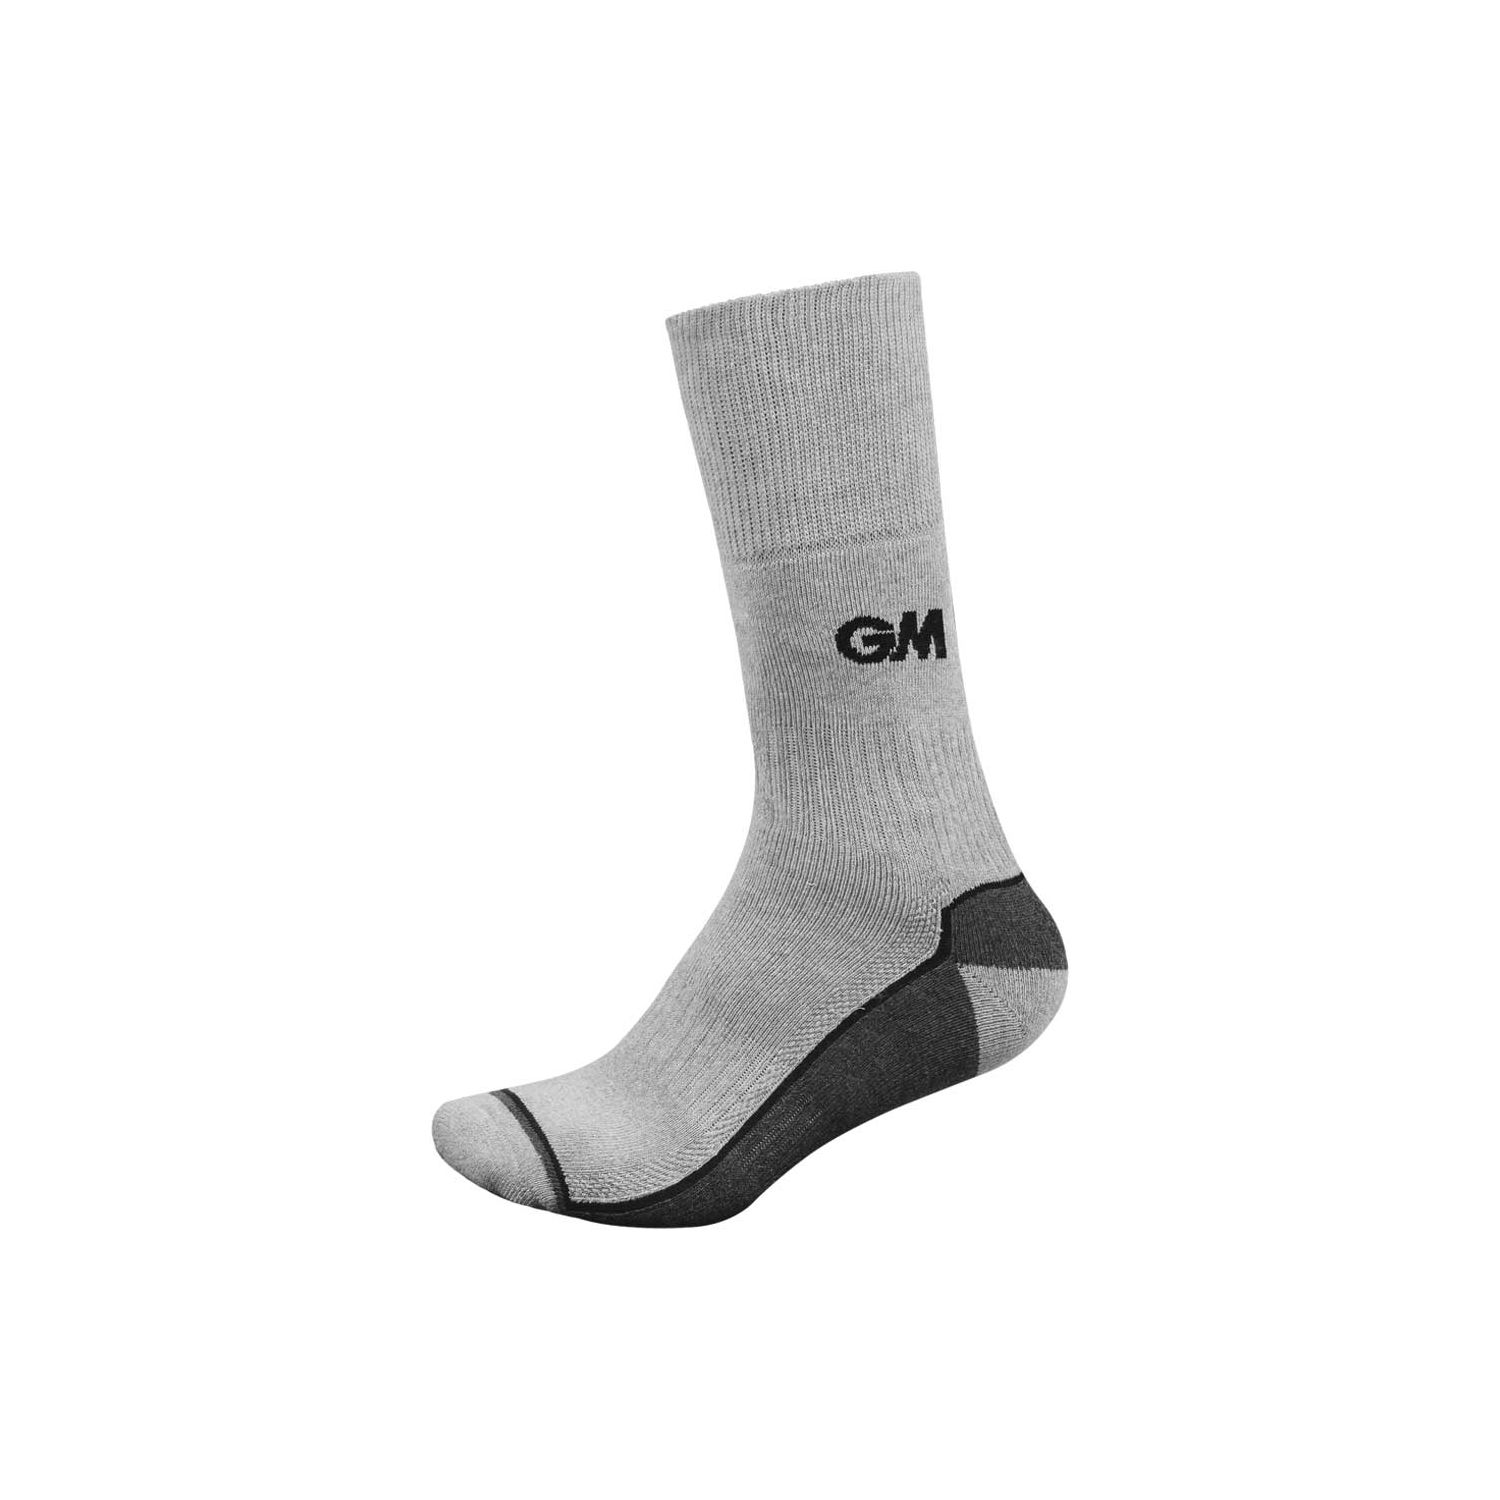 GM1 Cricket Socks Crew Size (Grey/Black)